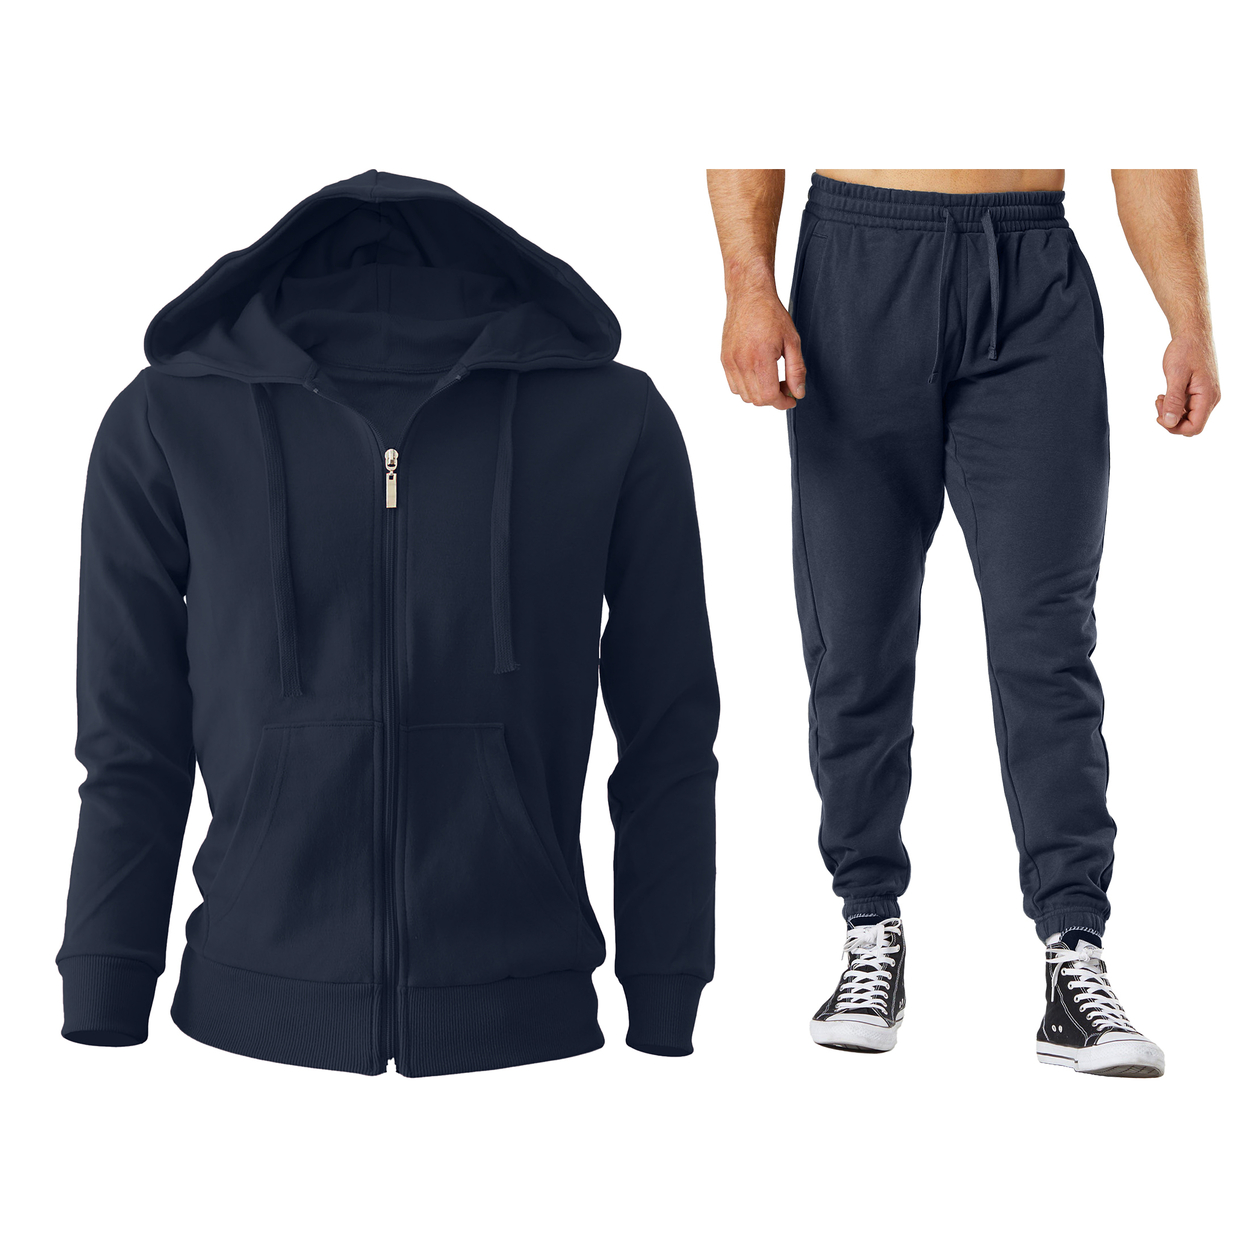 2/4-Piece: Men's Winter Warm Cozy Athletic Multi-Pockets BIG & TALL Sweatsuit Set - Navy, 1, Xx-large